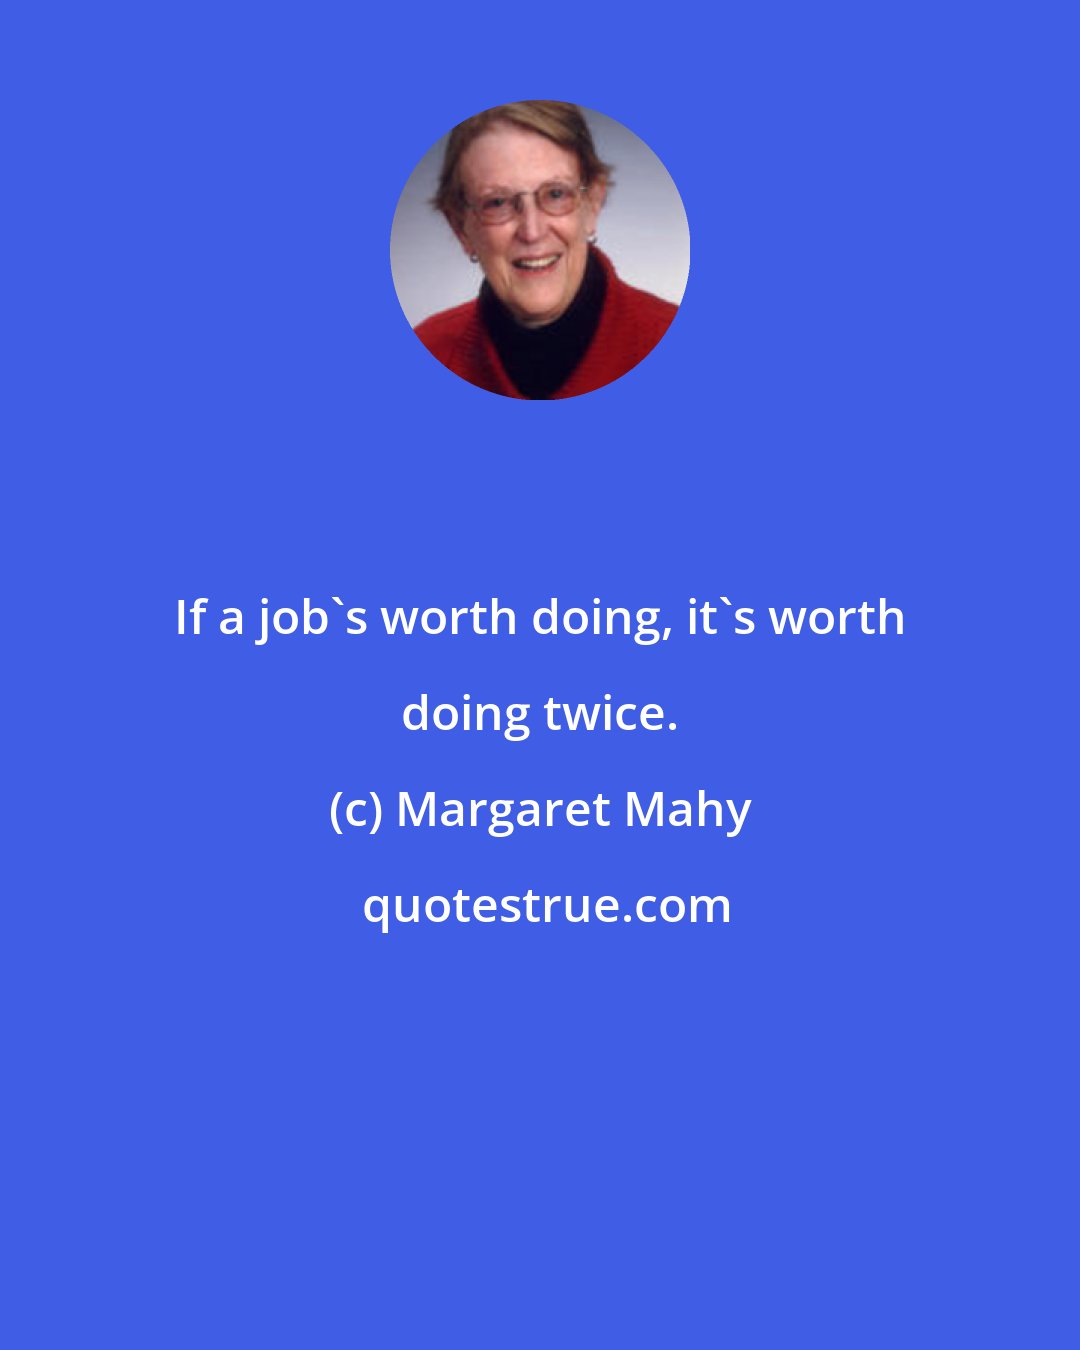 Margaret Mahy: If a job's worth doing, it's worth doing twice.